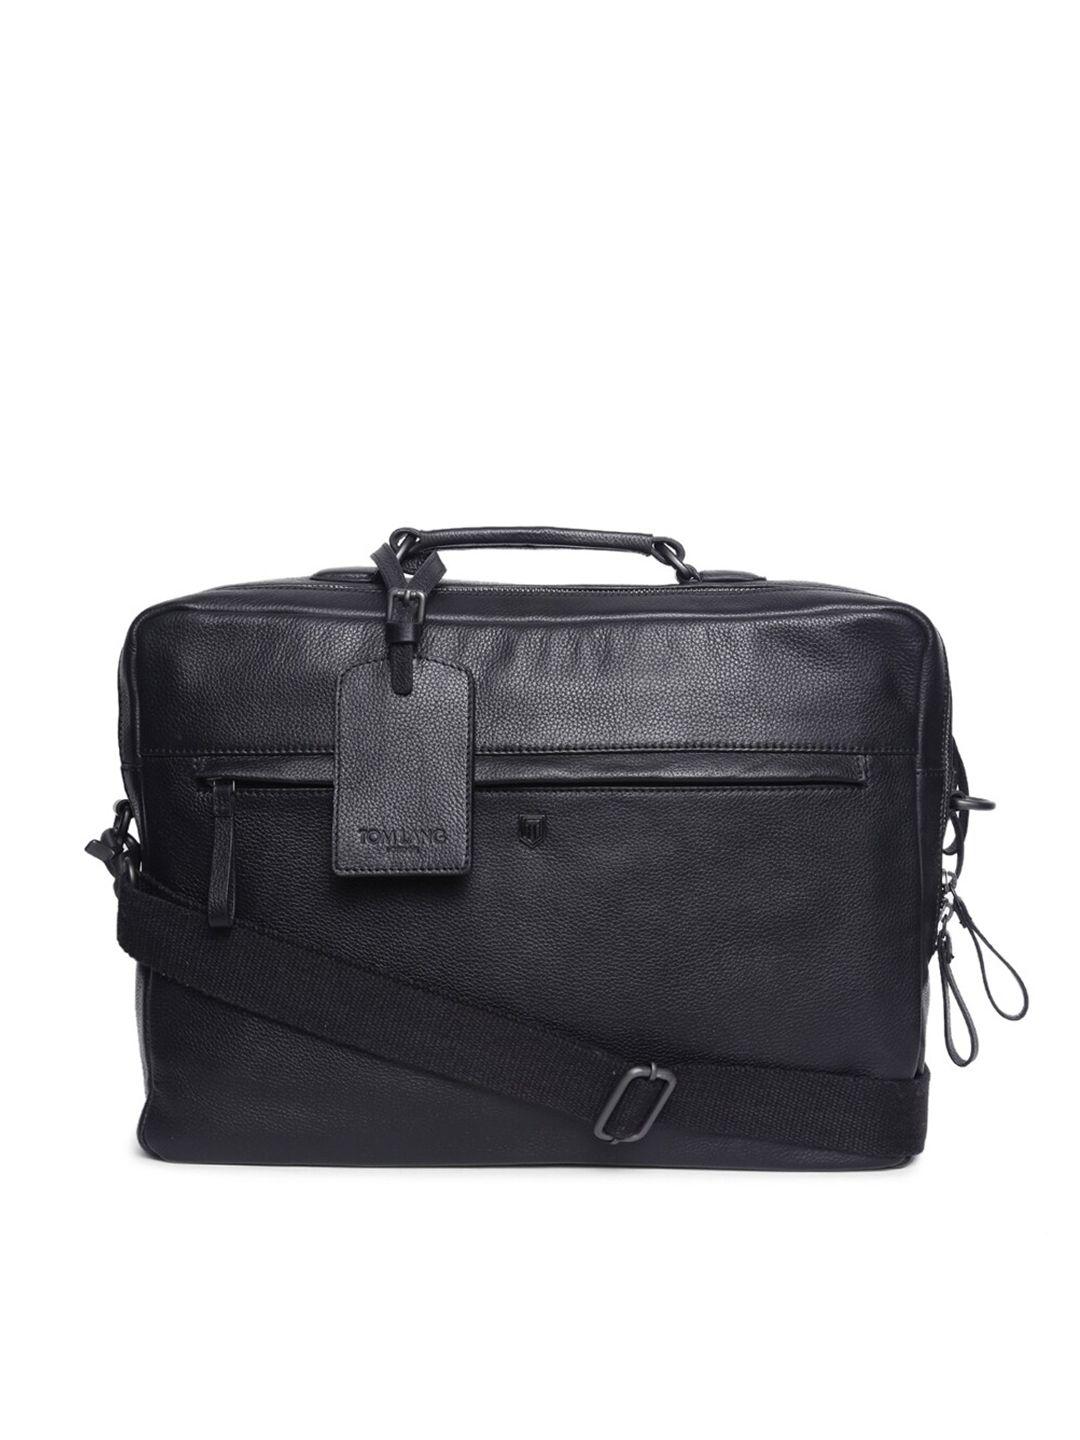 tom-lang-london-unisex-black-textured-leather-16-inch-laptop-bag